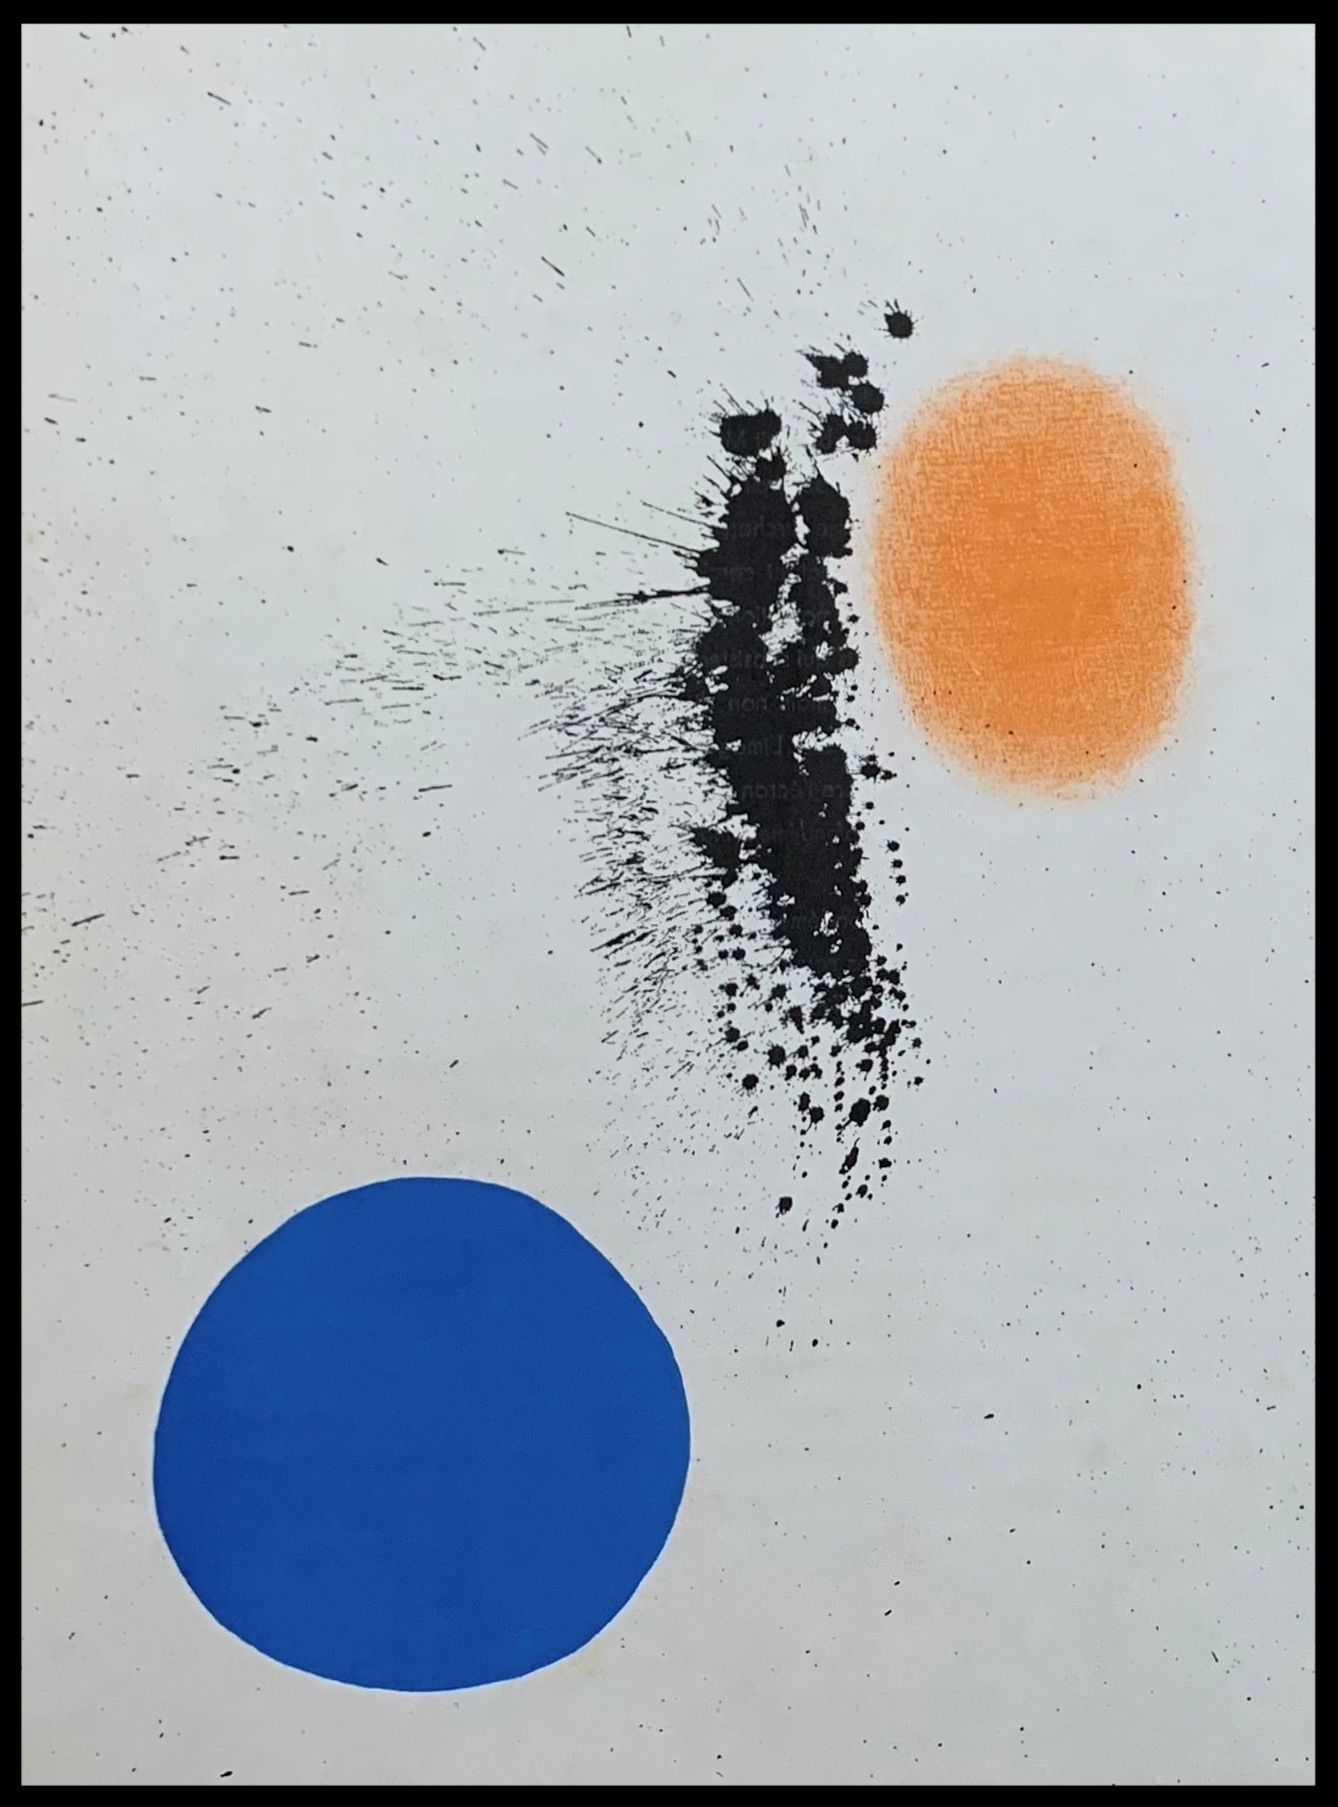 Joan Miro Joan MIRÓ (1893 - 1983)

Komposition I, 1961

Lithographie

Druck: unb&hellip;